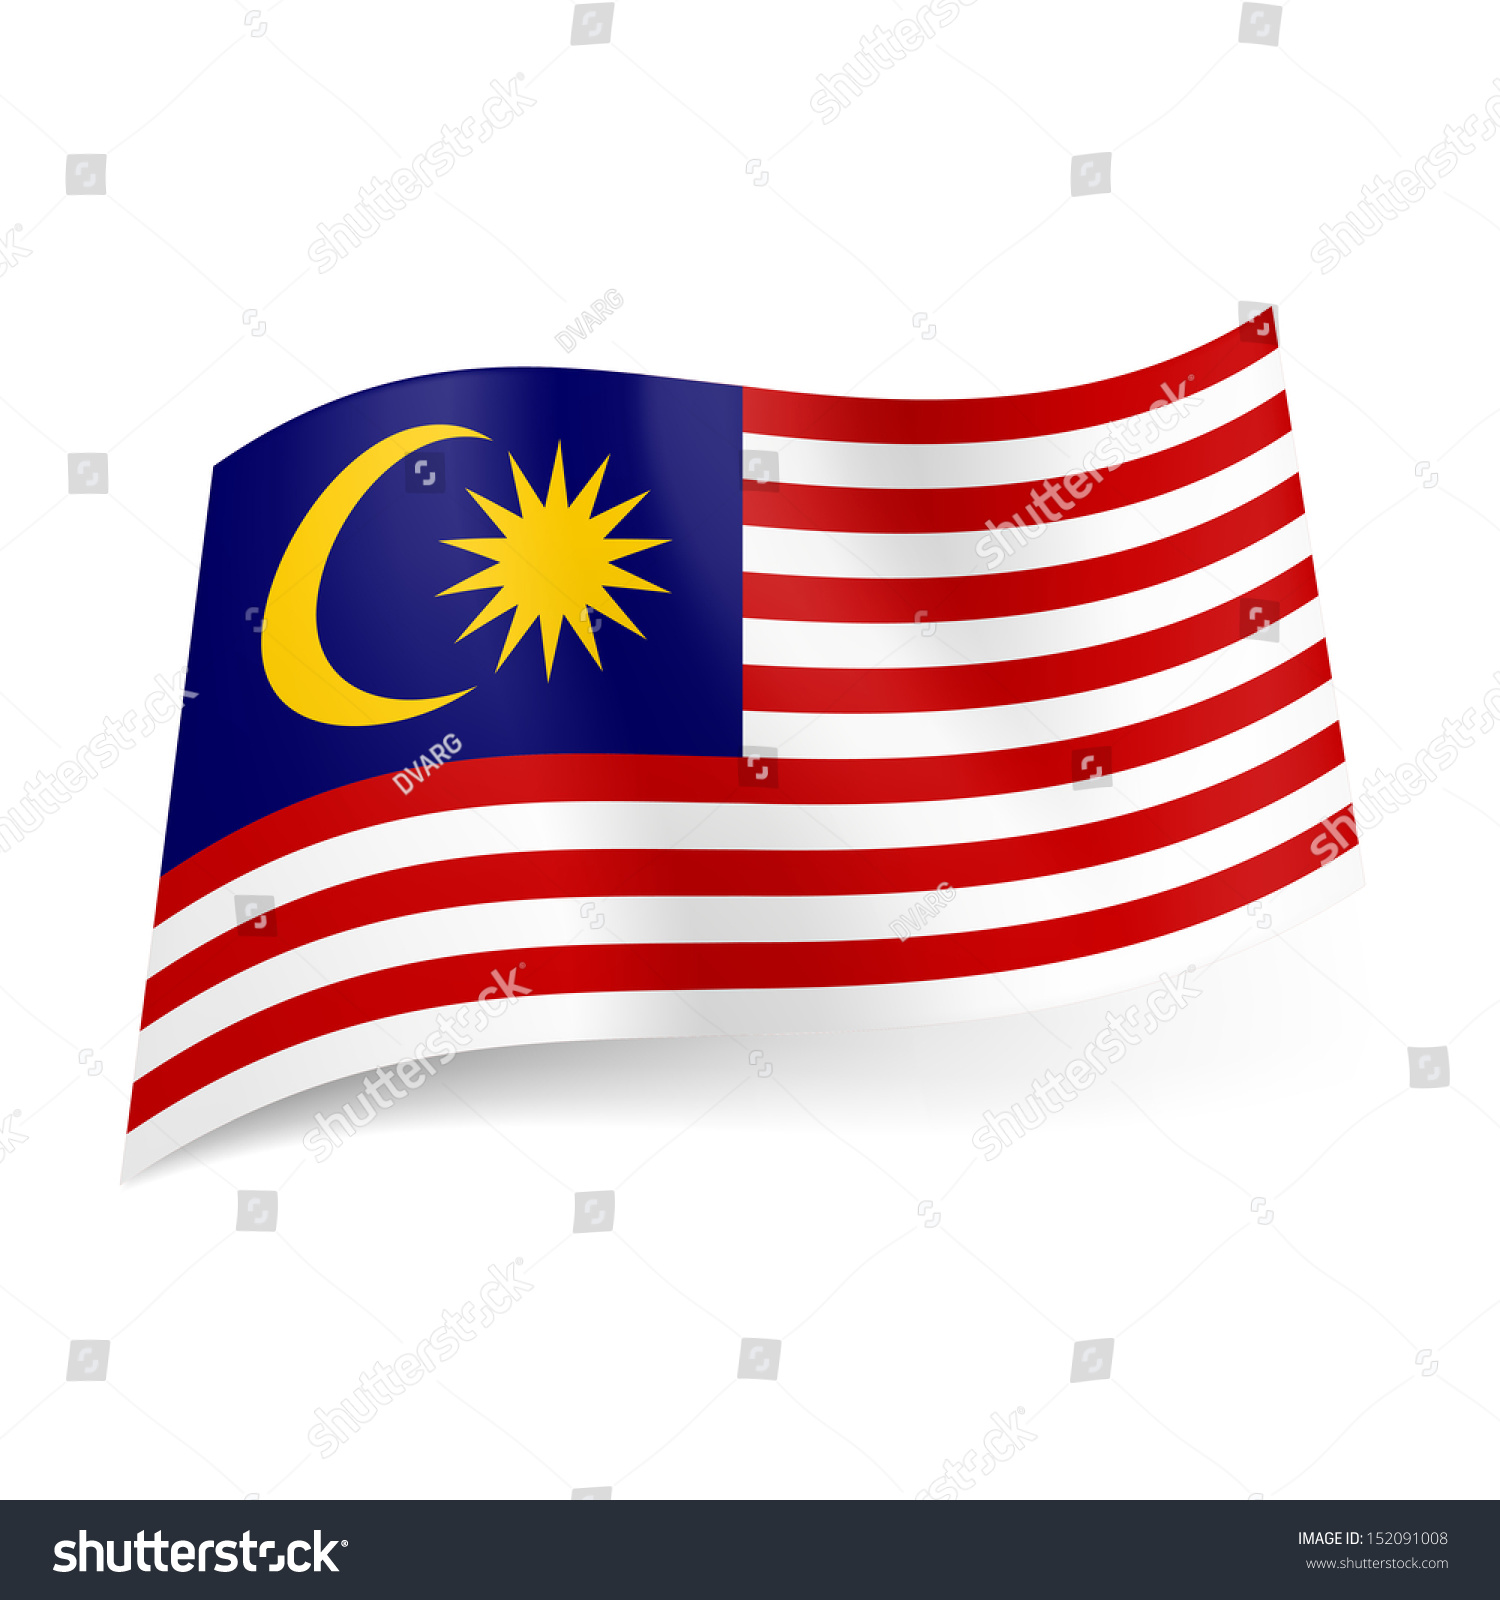 National Flag Malaysia Red White Horizontal Royalty Free Stock Image